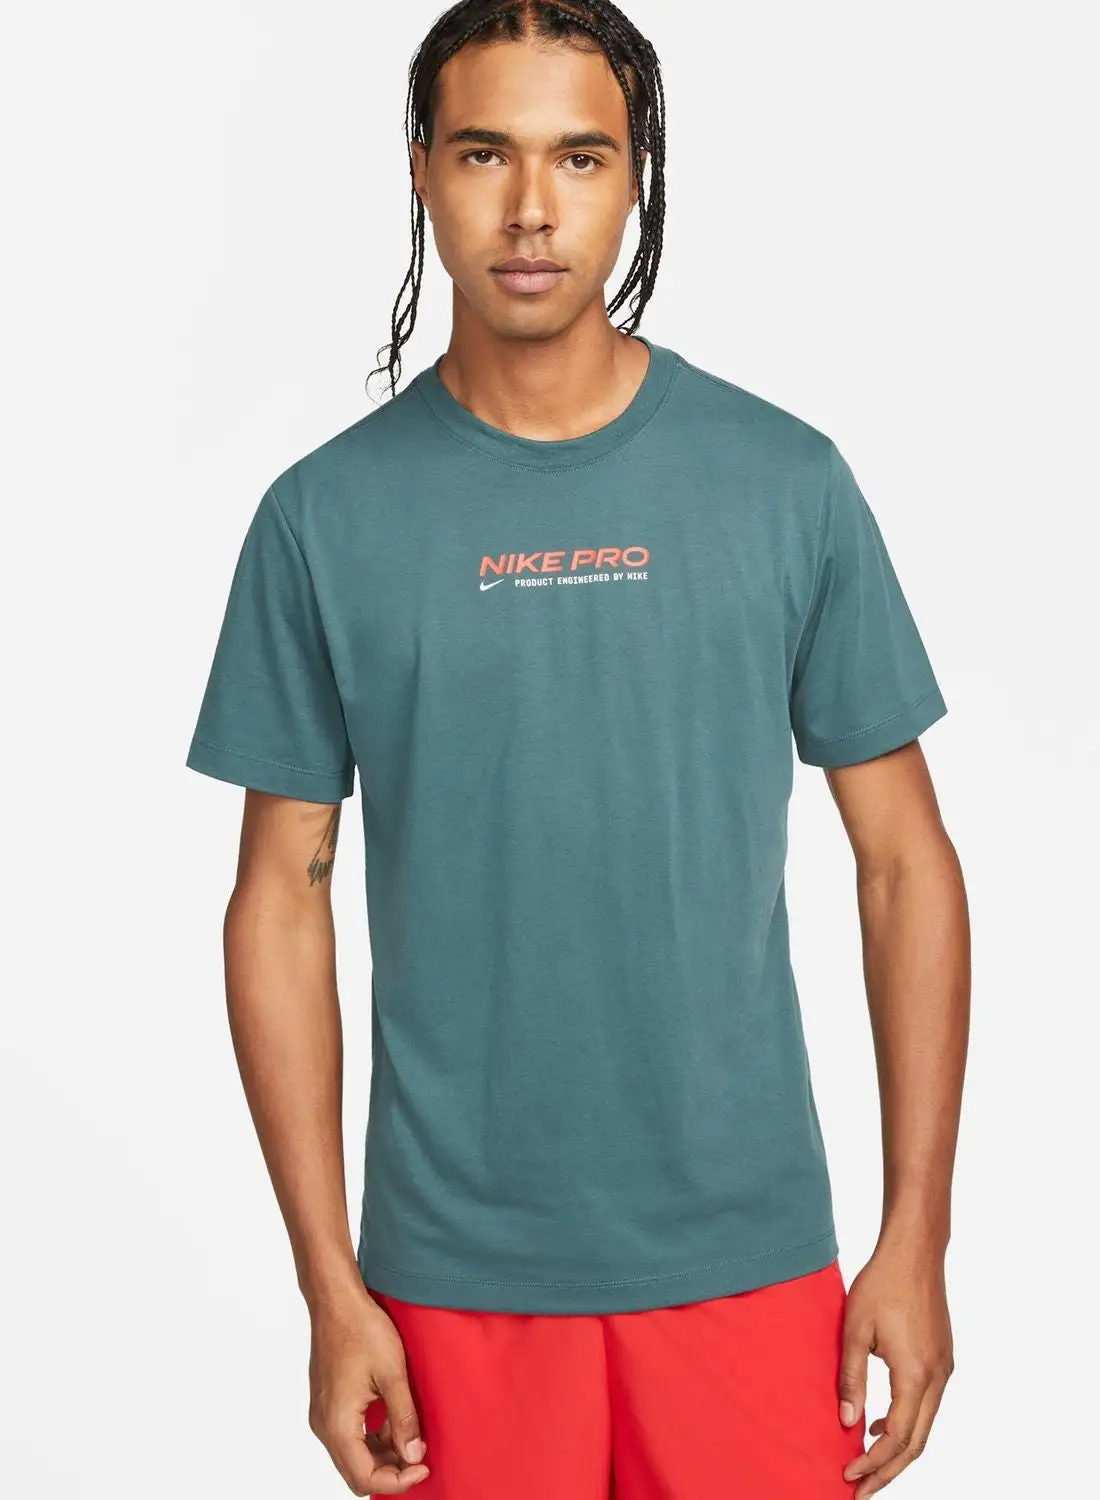 Nike Dri-Fit Pro 2 T-Shirt